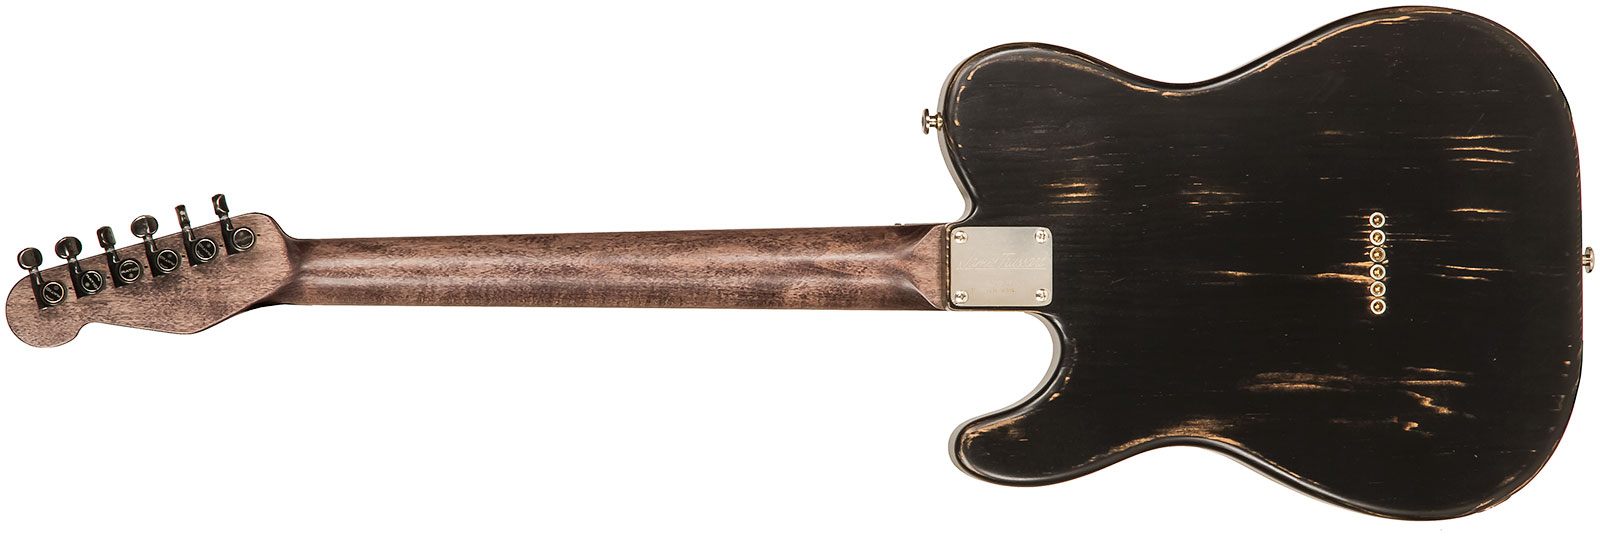 James Trussart Steeltopcaster Sh Ht Eb #21135 - Antique Silver Paisley - Tel shape electric guitar - Variation 1